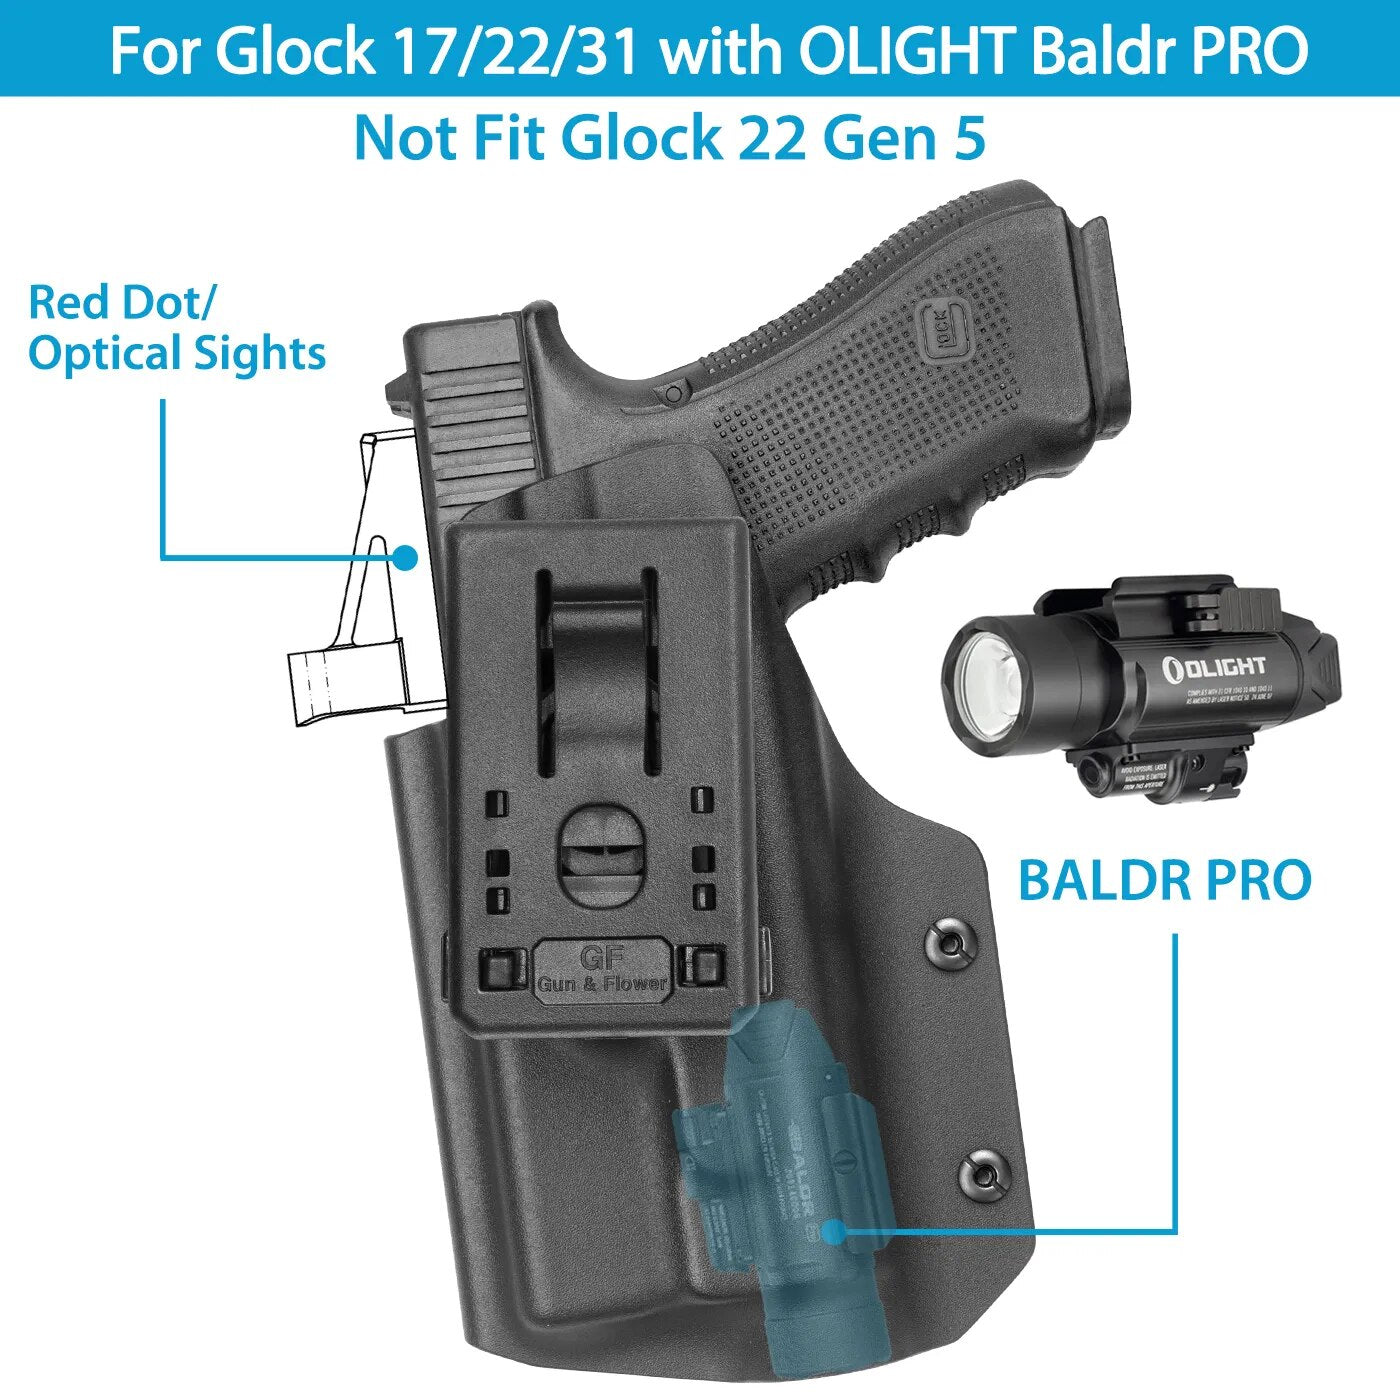 OWb Kydex Holster for Glock 17 G22 G31 With Olight Baldr PRO/ PL Mini2 Valkyrie /Olight Baldr Mini Light & Red D